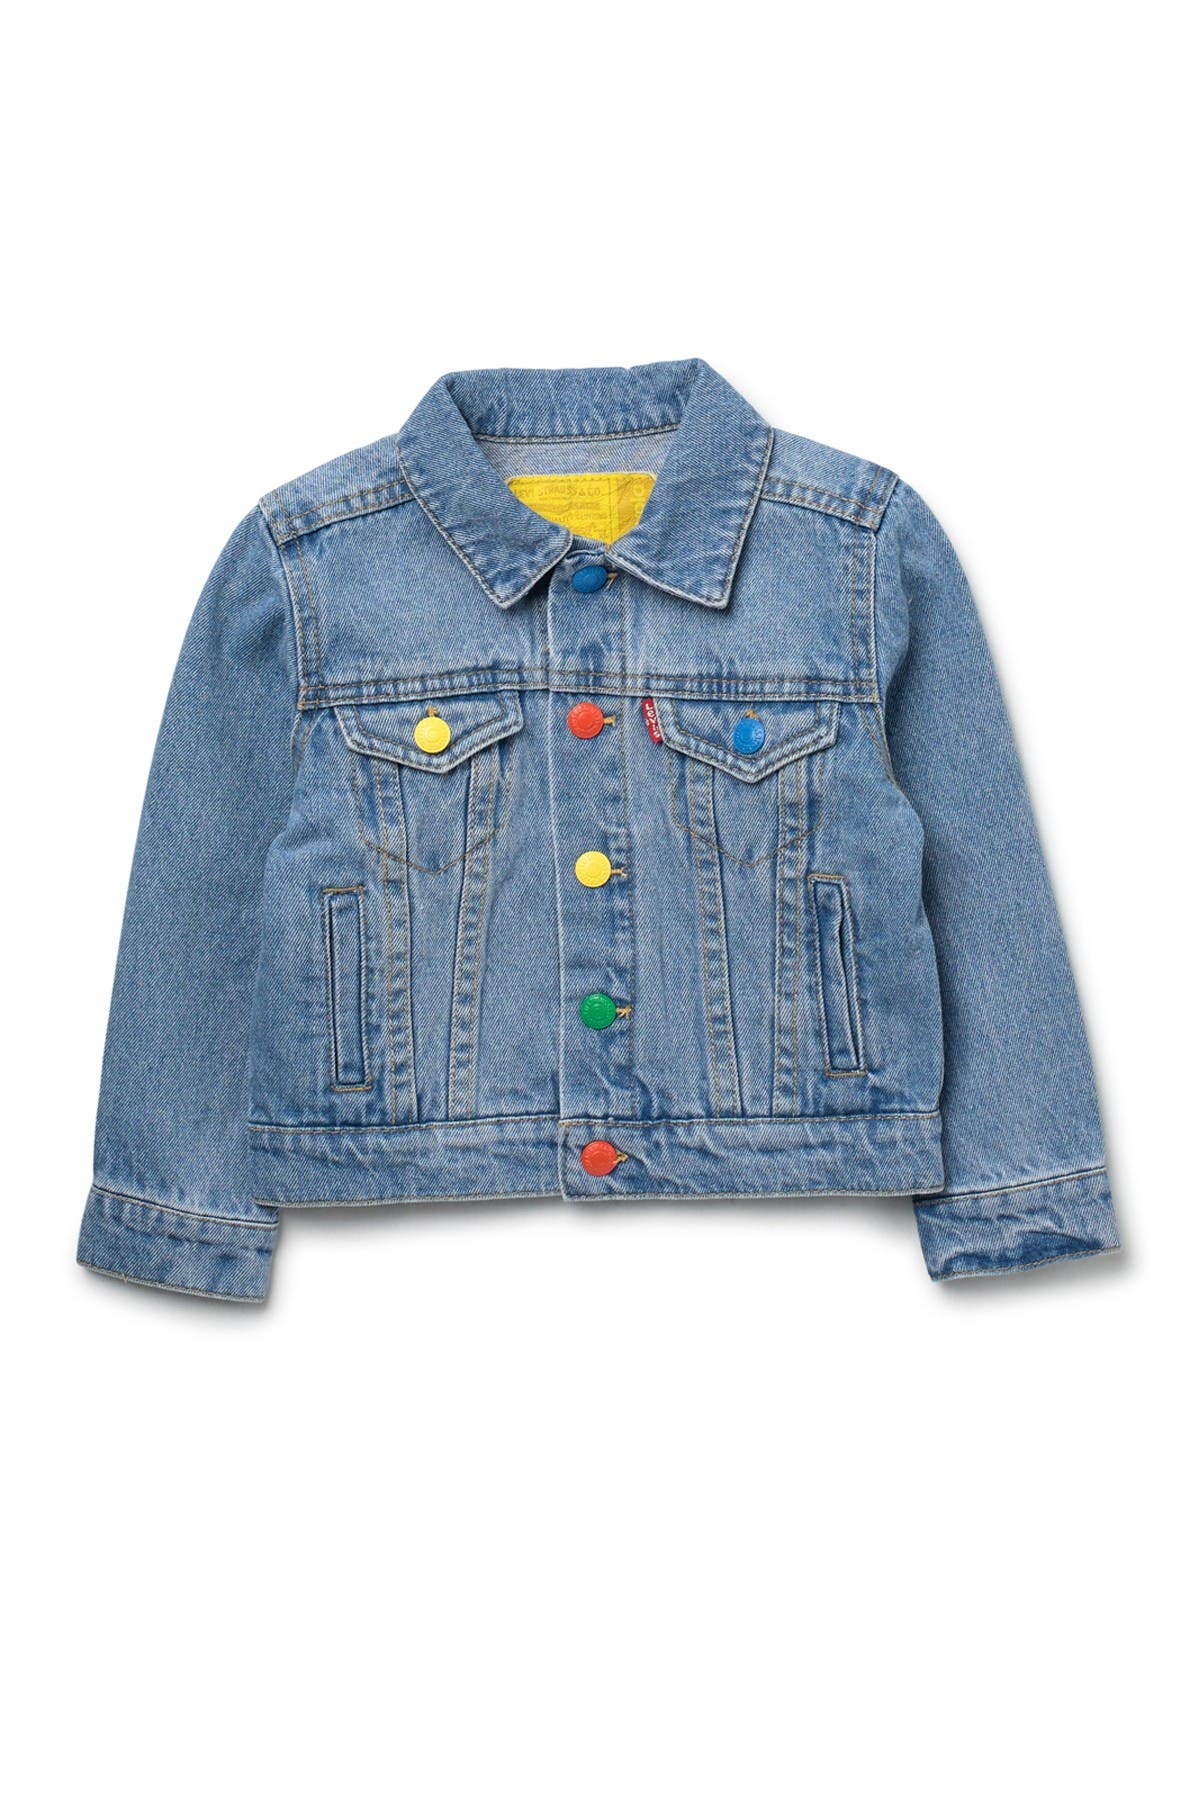 levi's toddler trucker jacket